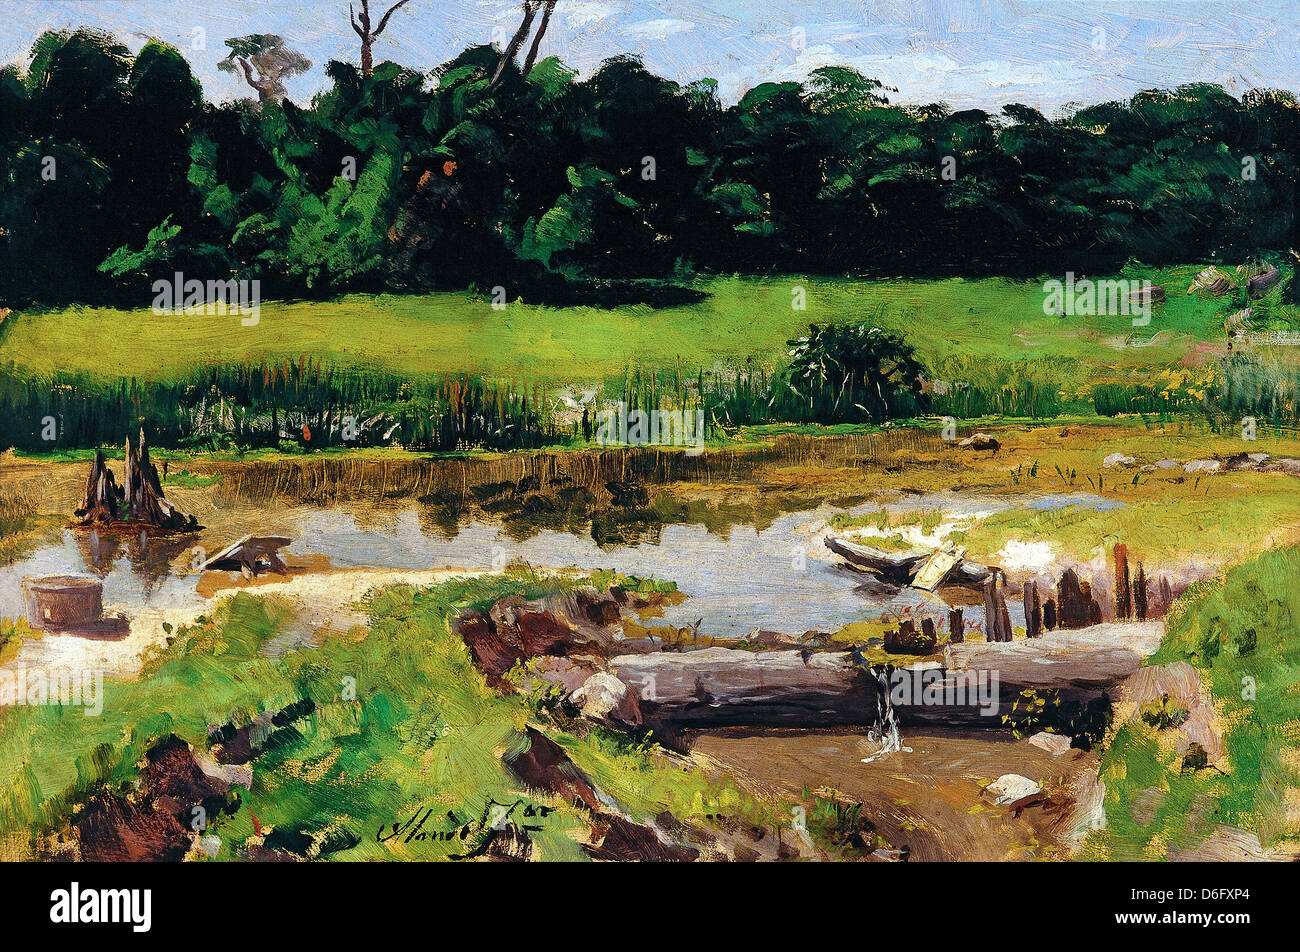 Jose de Almeida Junior, Fluvial Landschaft 1899 Öl auf Holz. Pinacoteca Estado de São Paulo, Brasilien Stockfoto